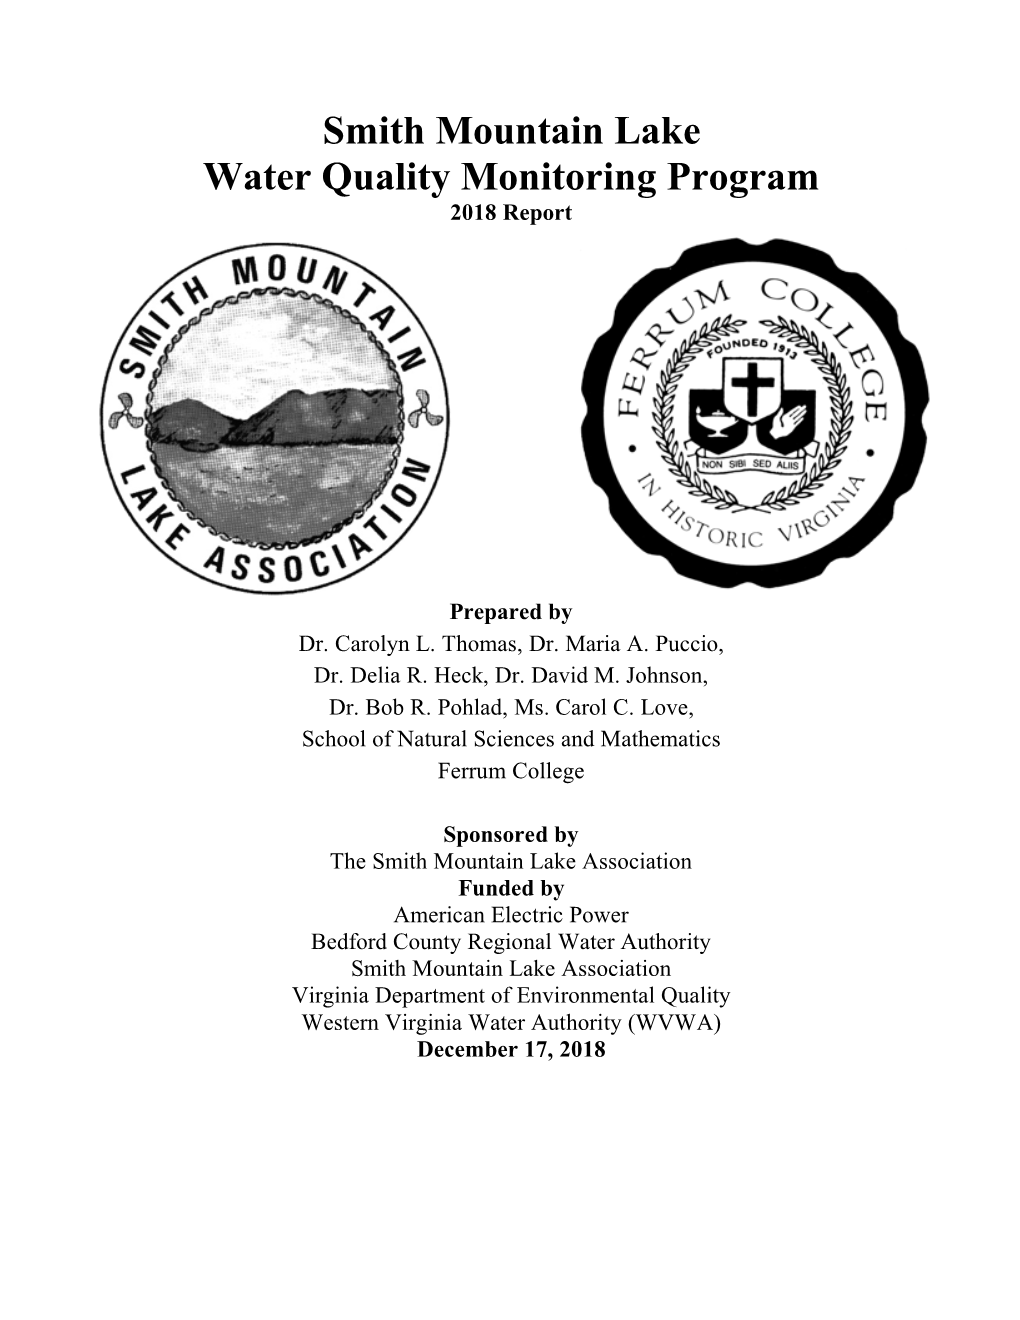 Smith Mountain Lake Water Quality Monitoring Program 2018 Report